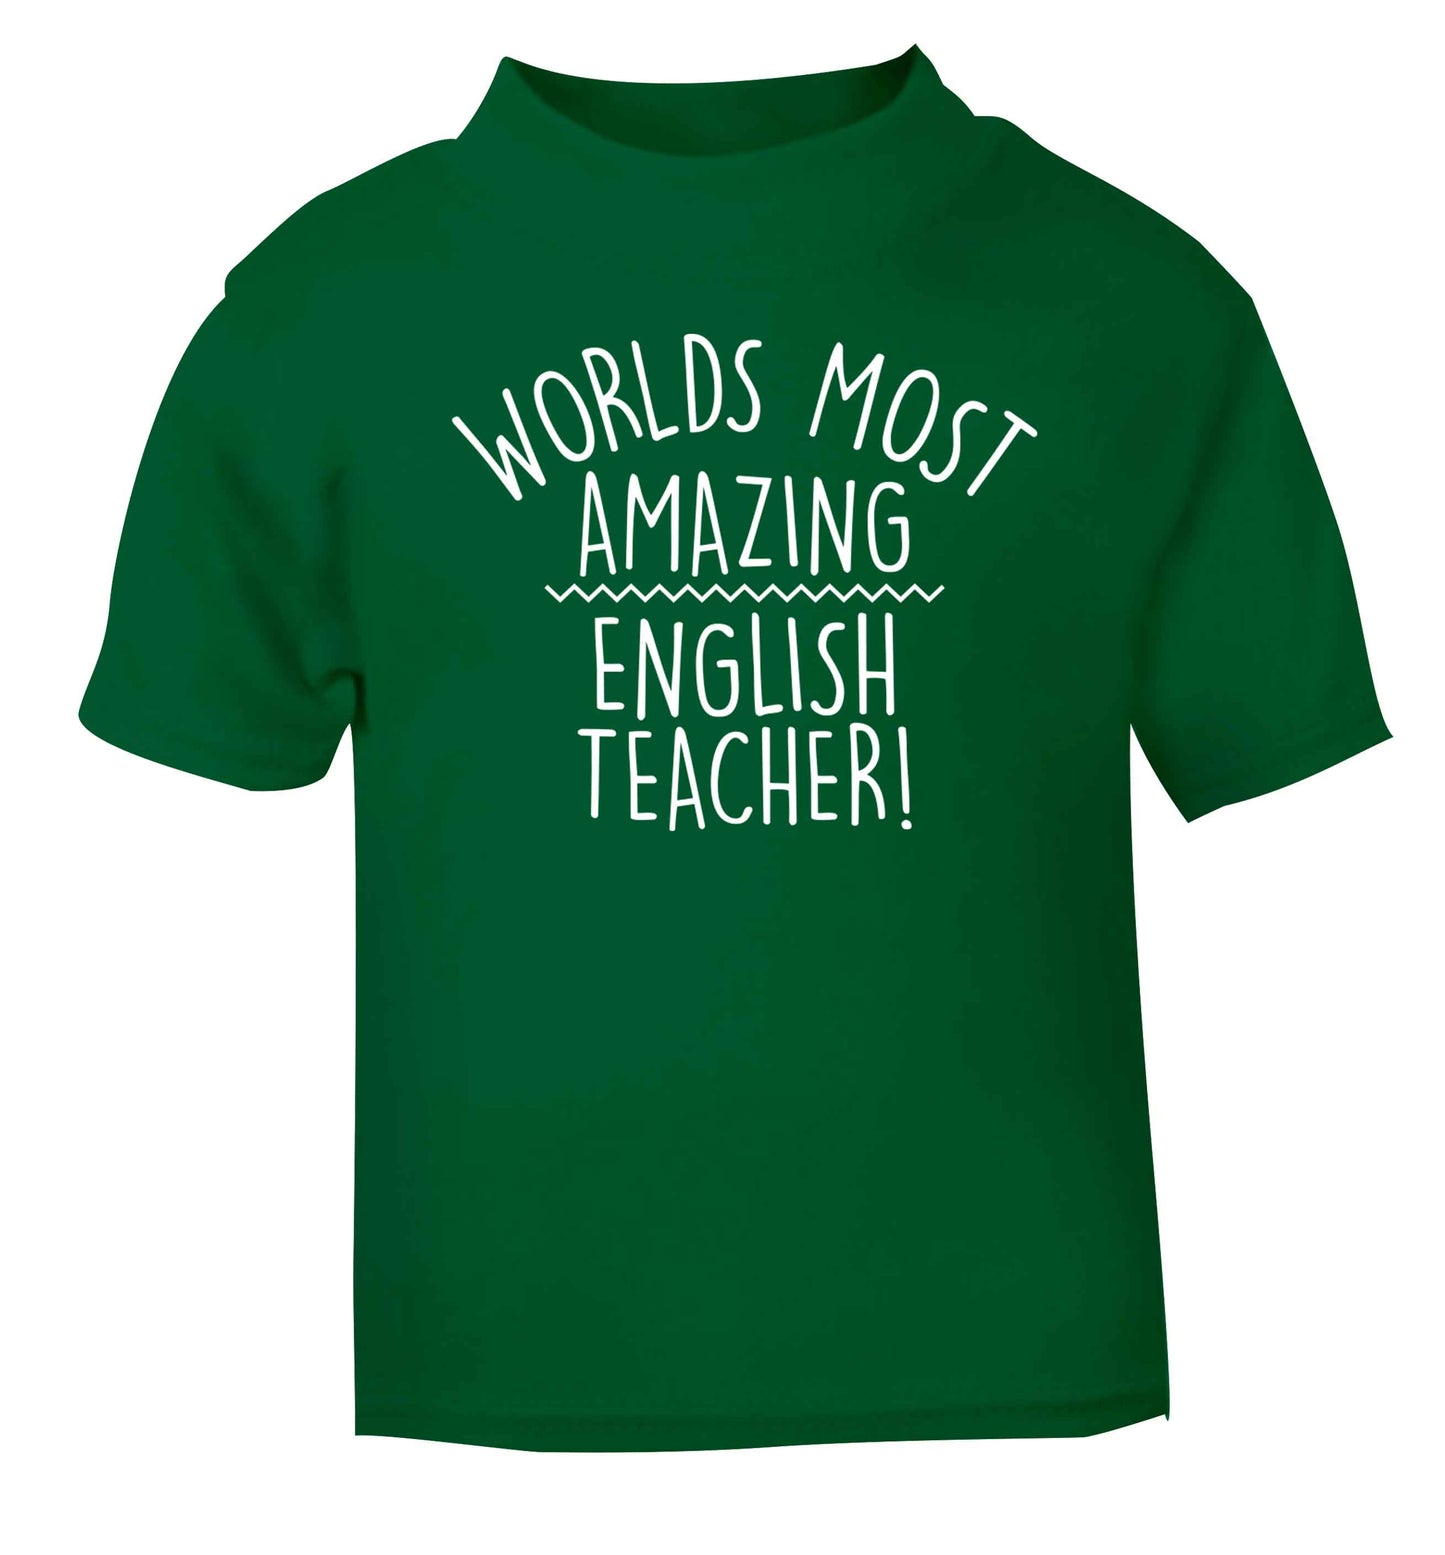 Worlds most amazing English teacher green baby toddler Tshirt 2 Years